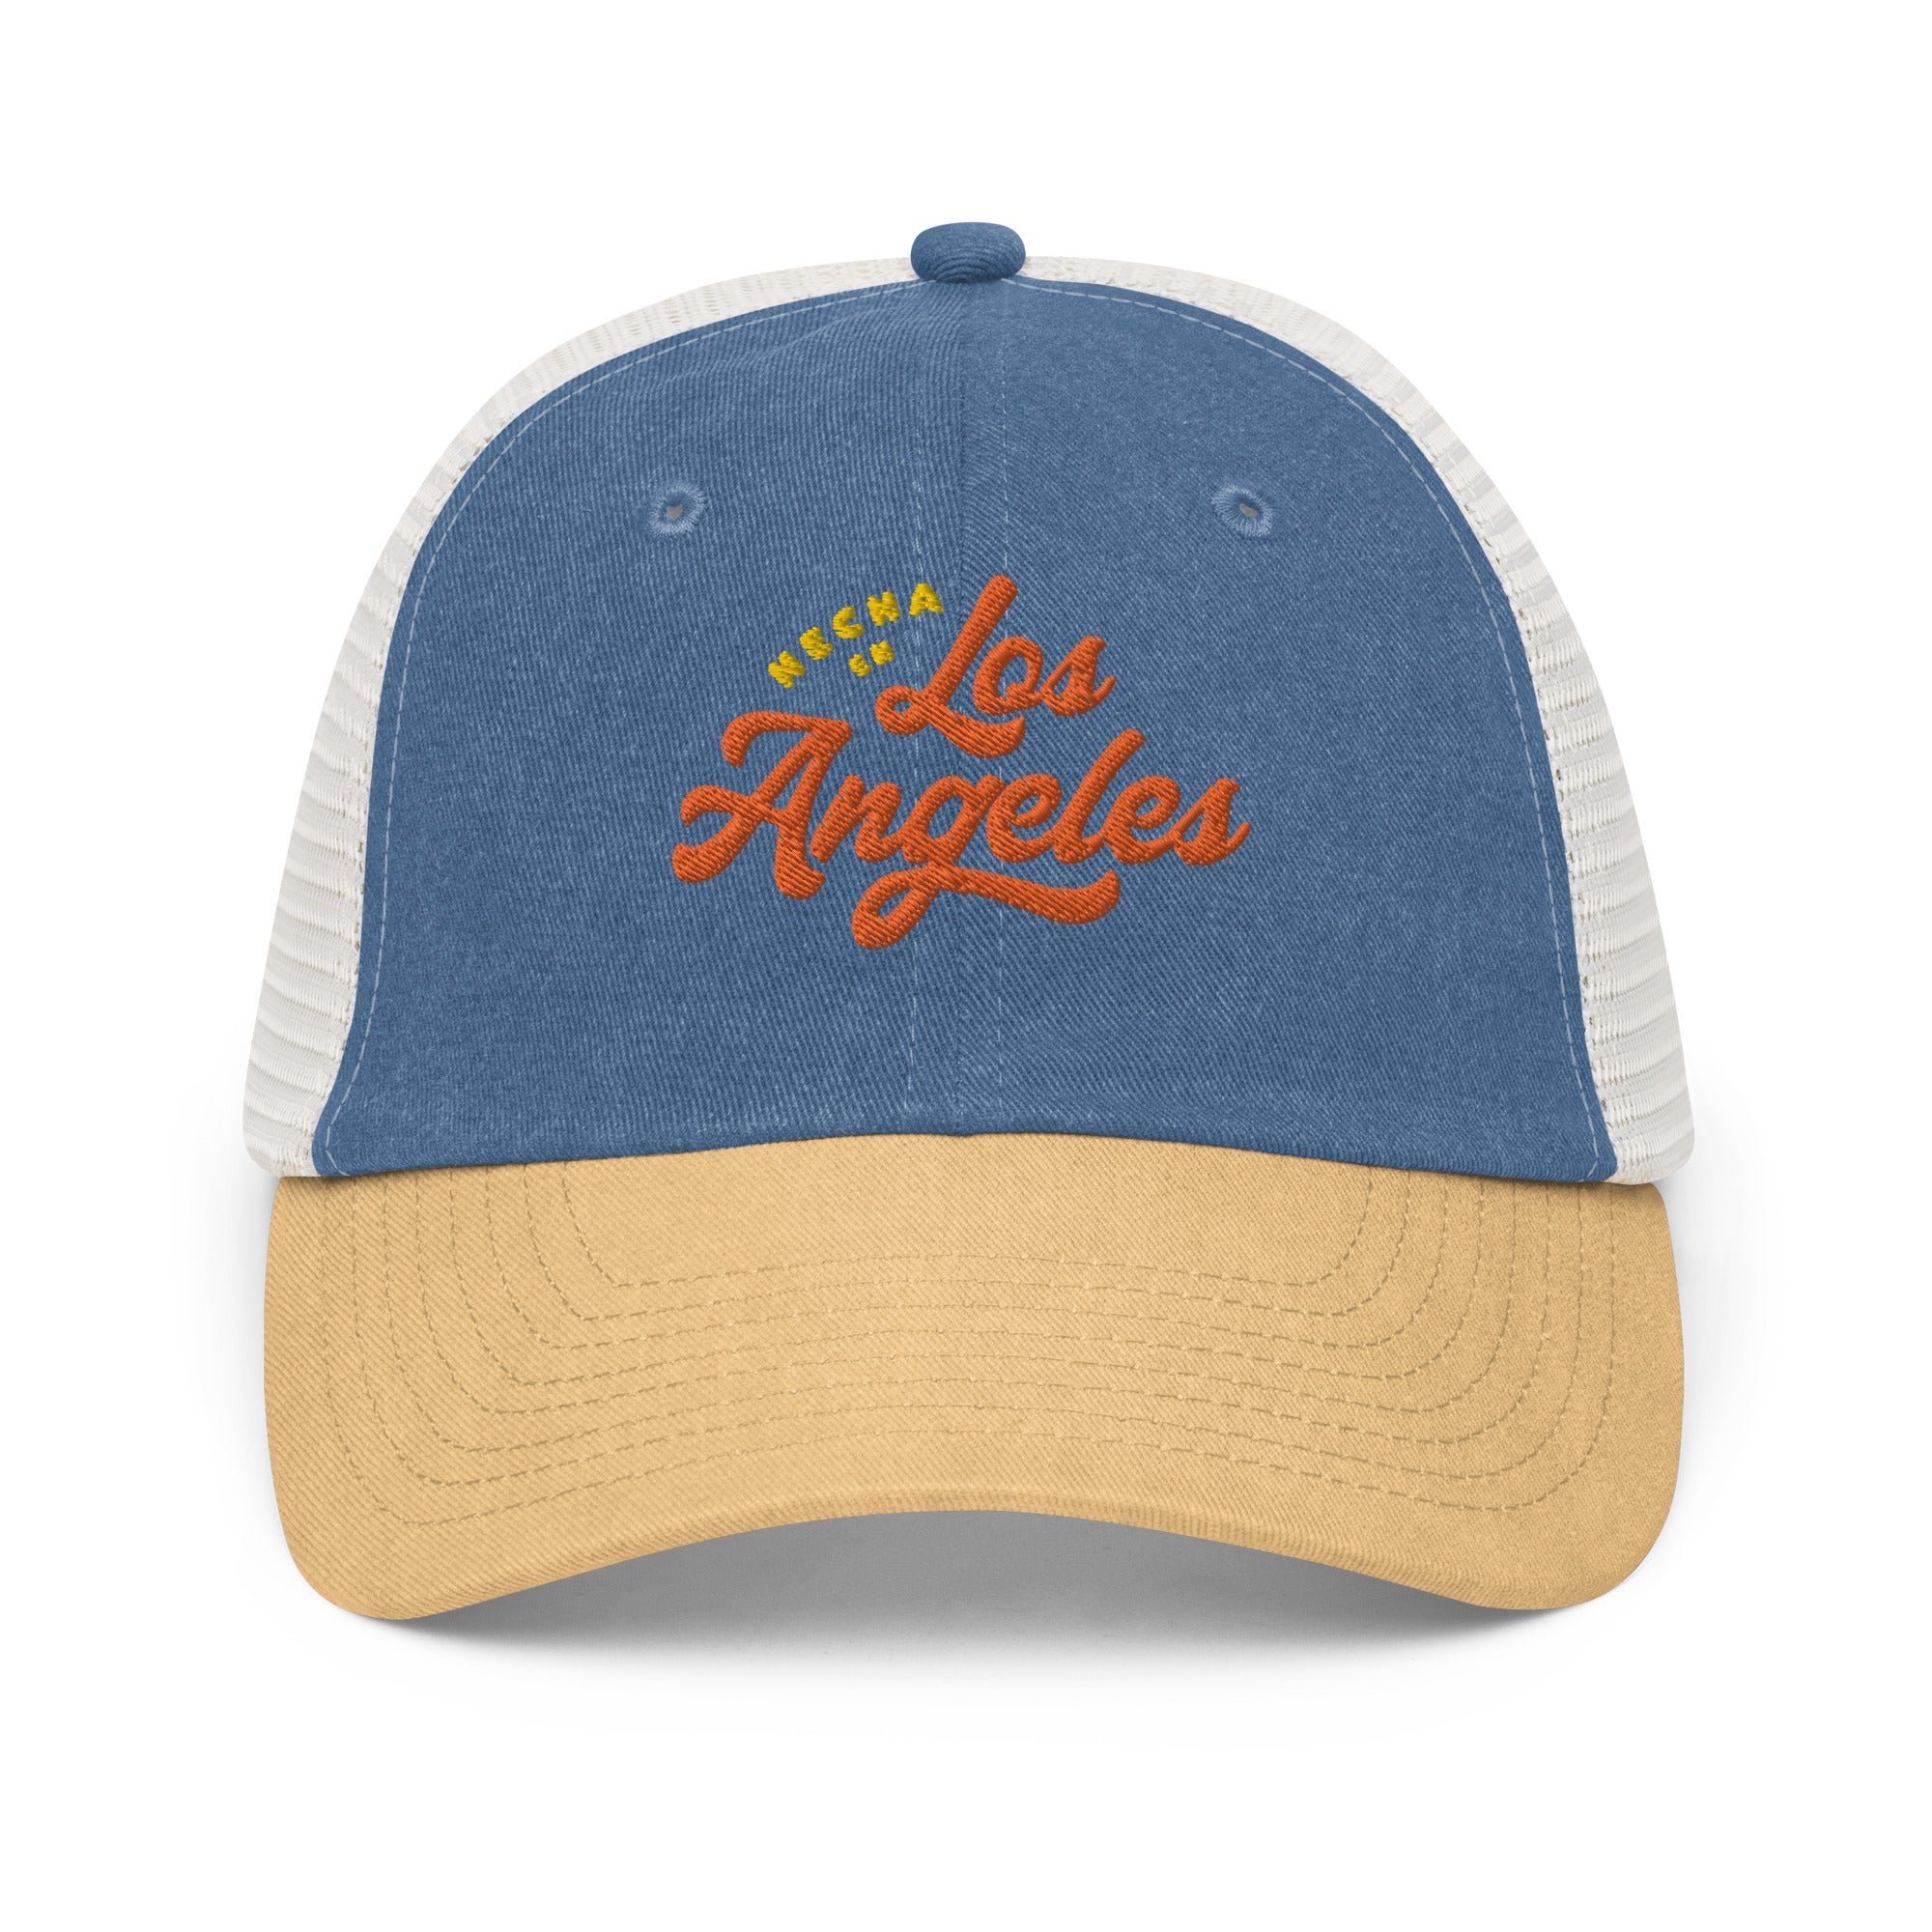 Hecha En Los Angeles Pigment-dyed cap